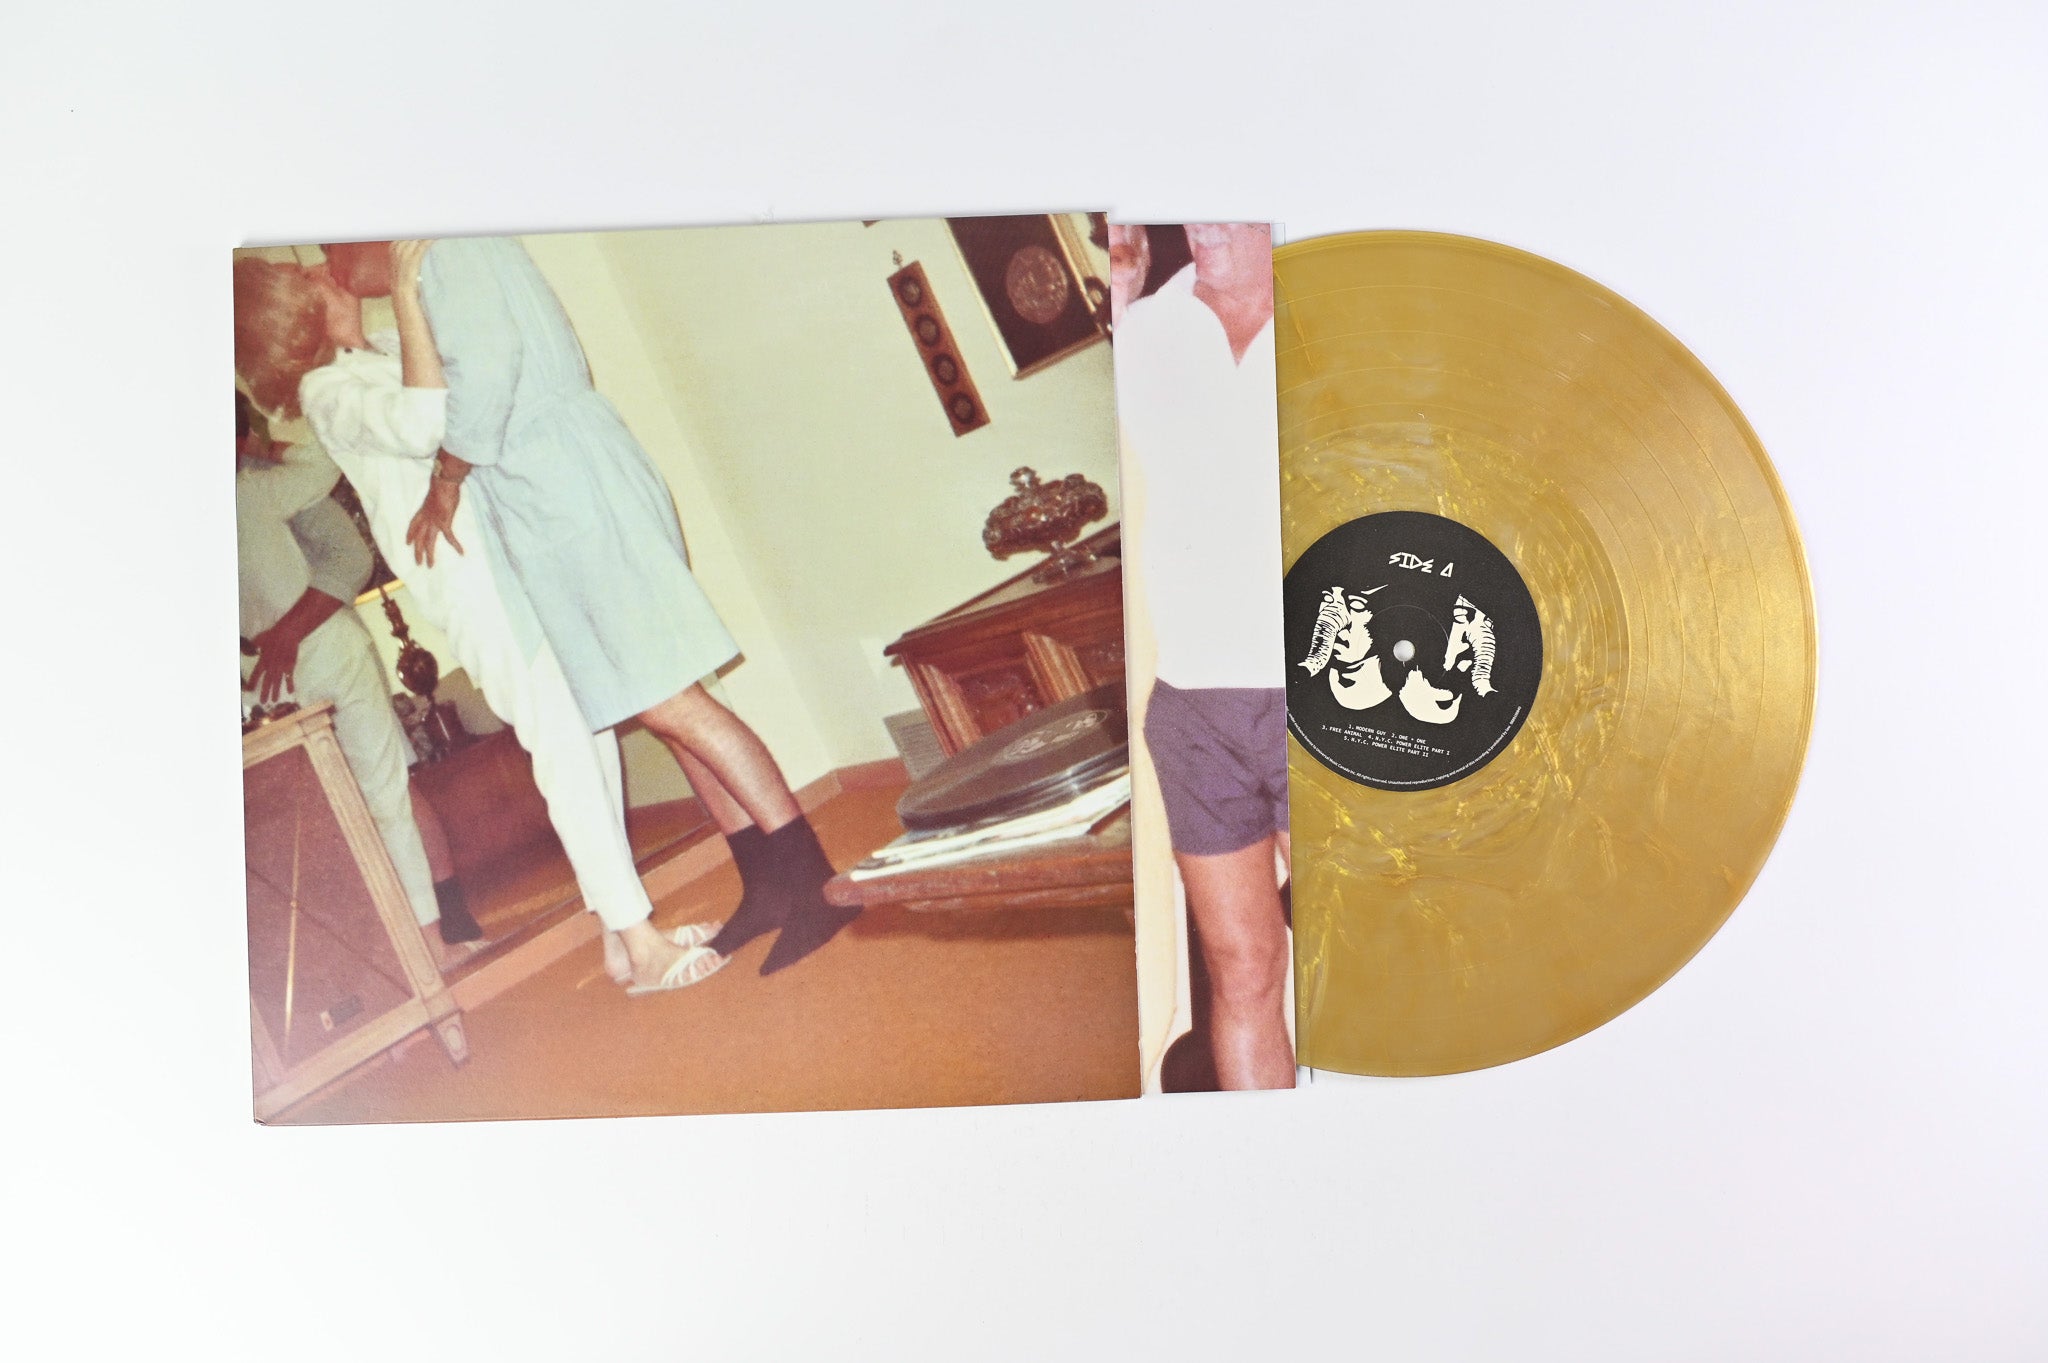 Death From Above 1979 - Is 4 Lovers on Spinefarm Ltd Gold Vinyl